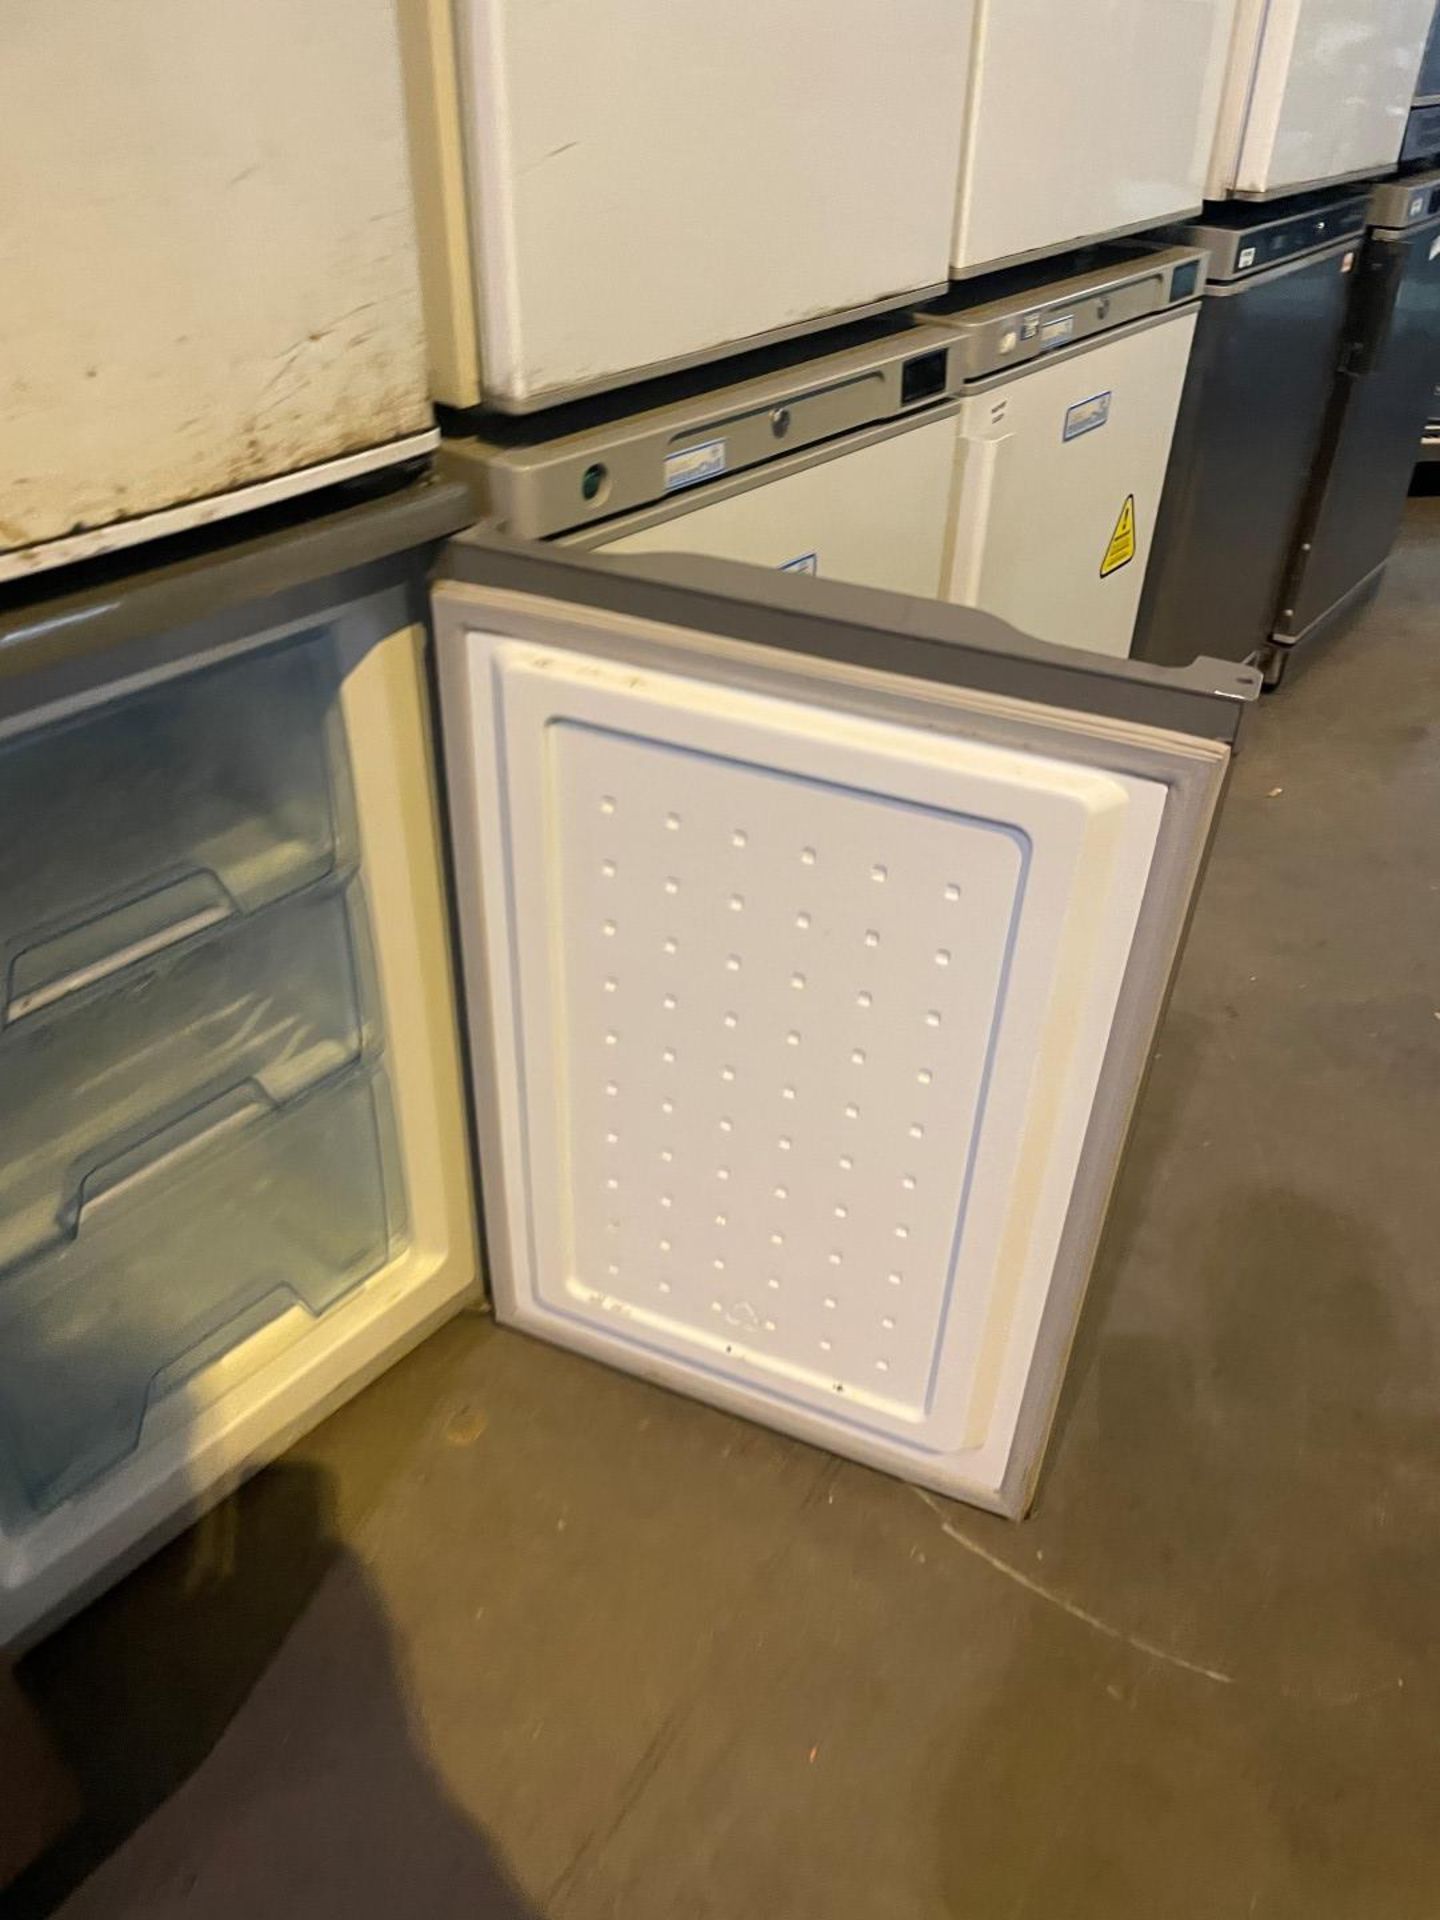 1 x Logik Undercounter Three Drawer Storage Freezer With Silver Finish - Image 4 of 4